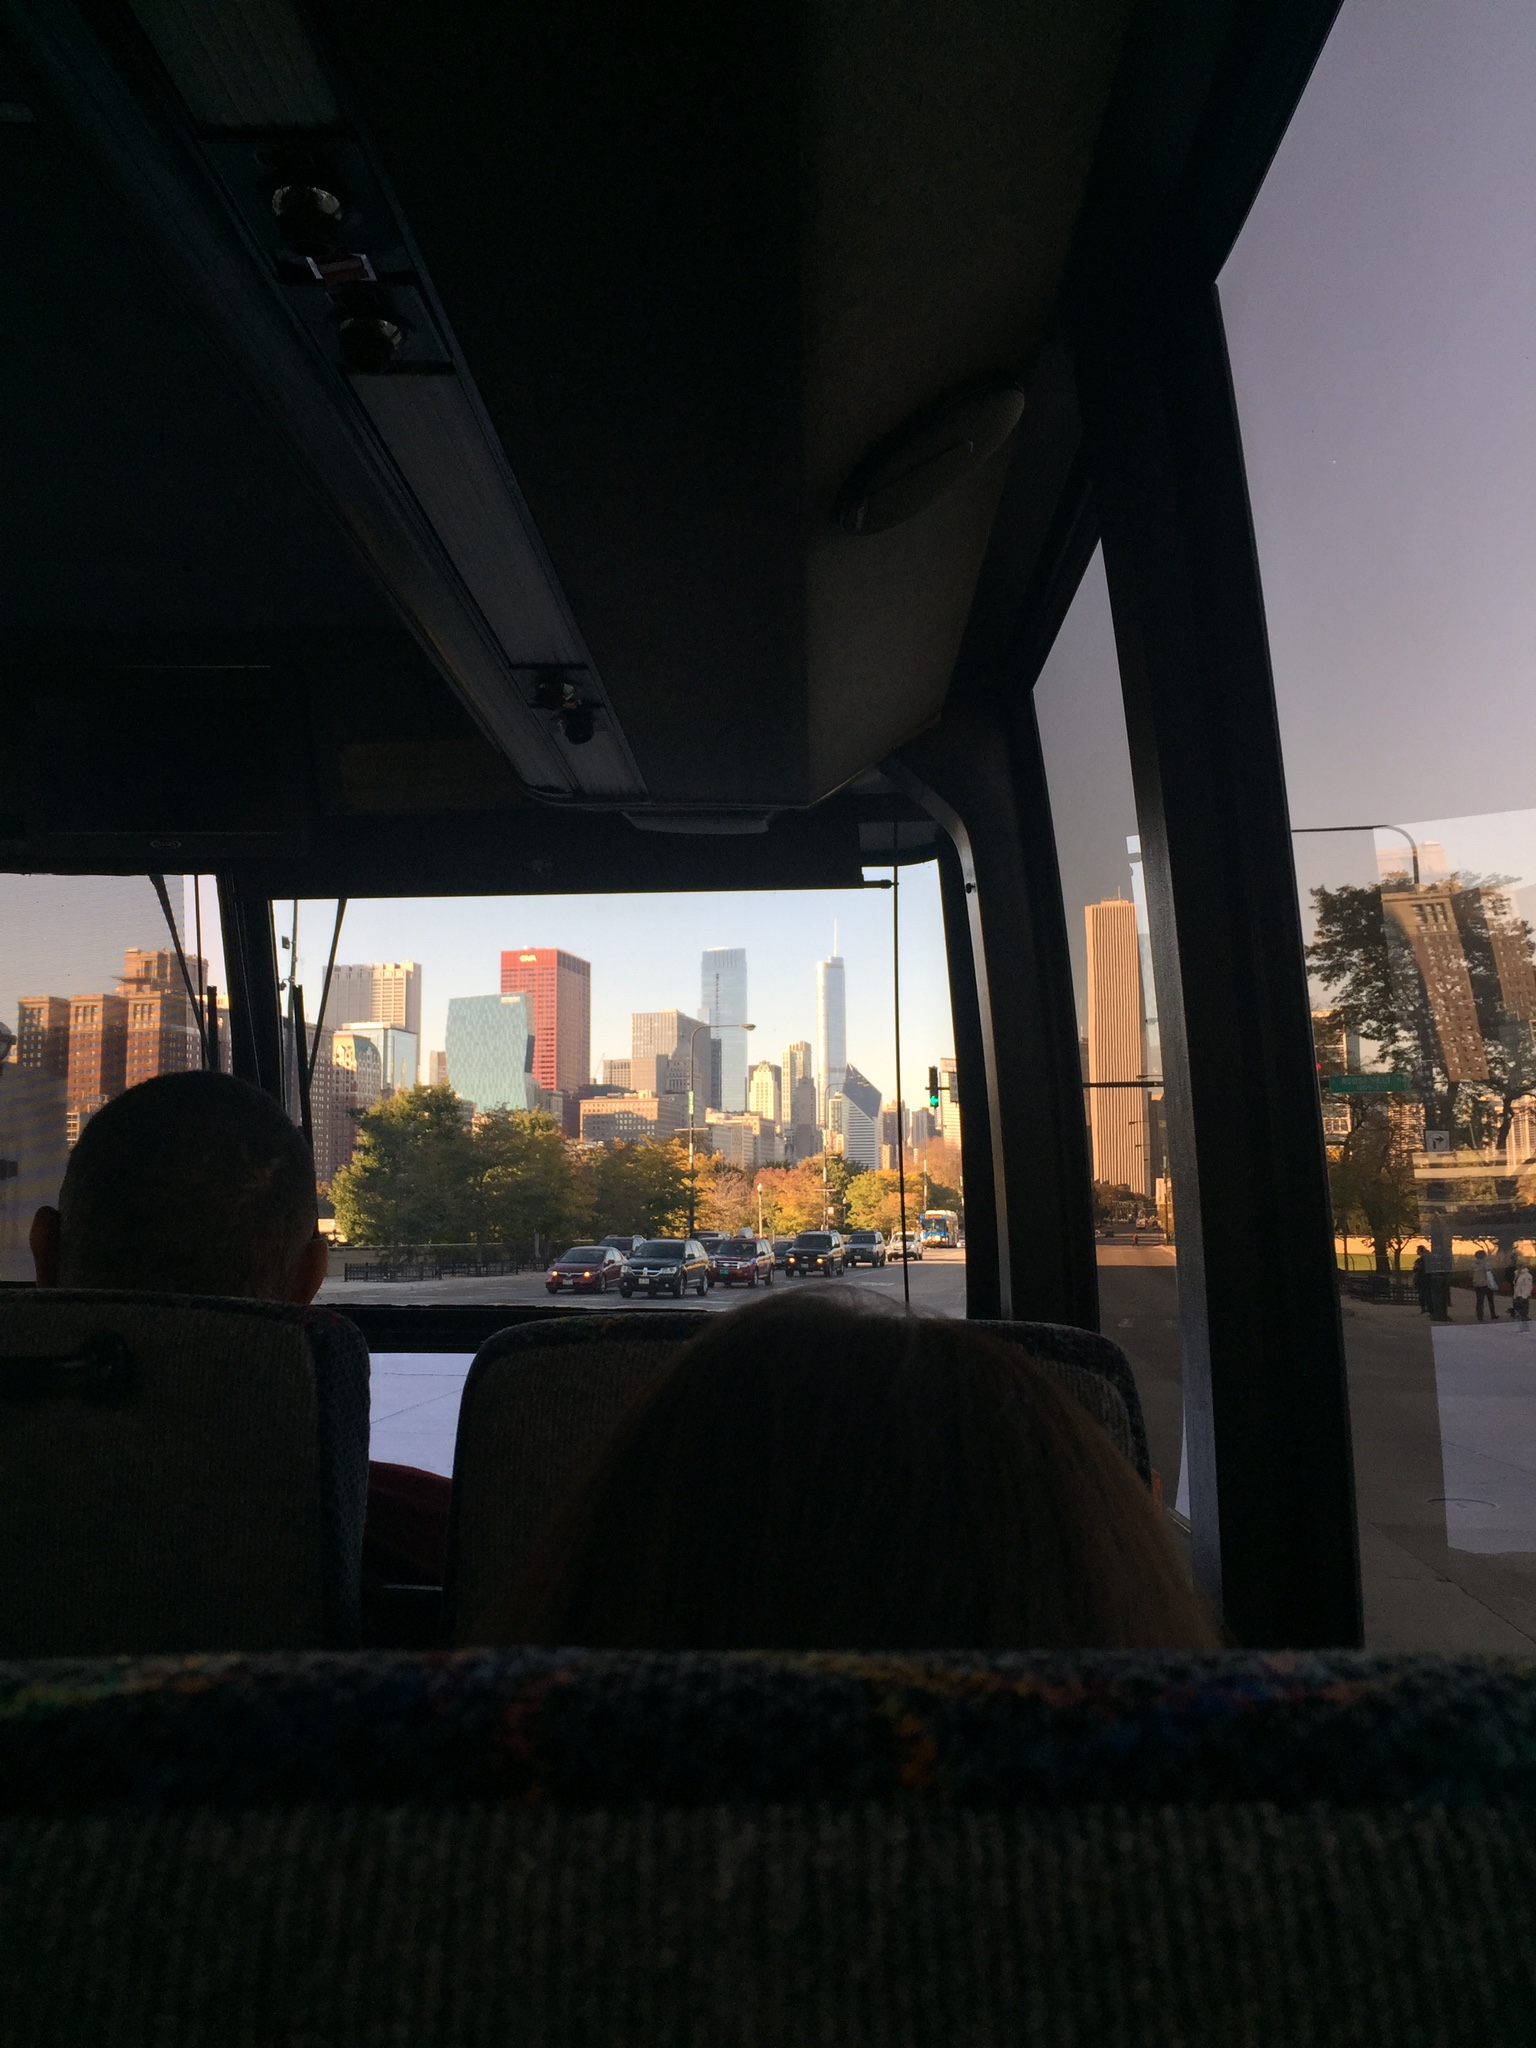 Chicago through the bus window